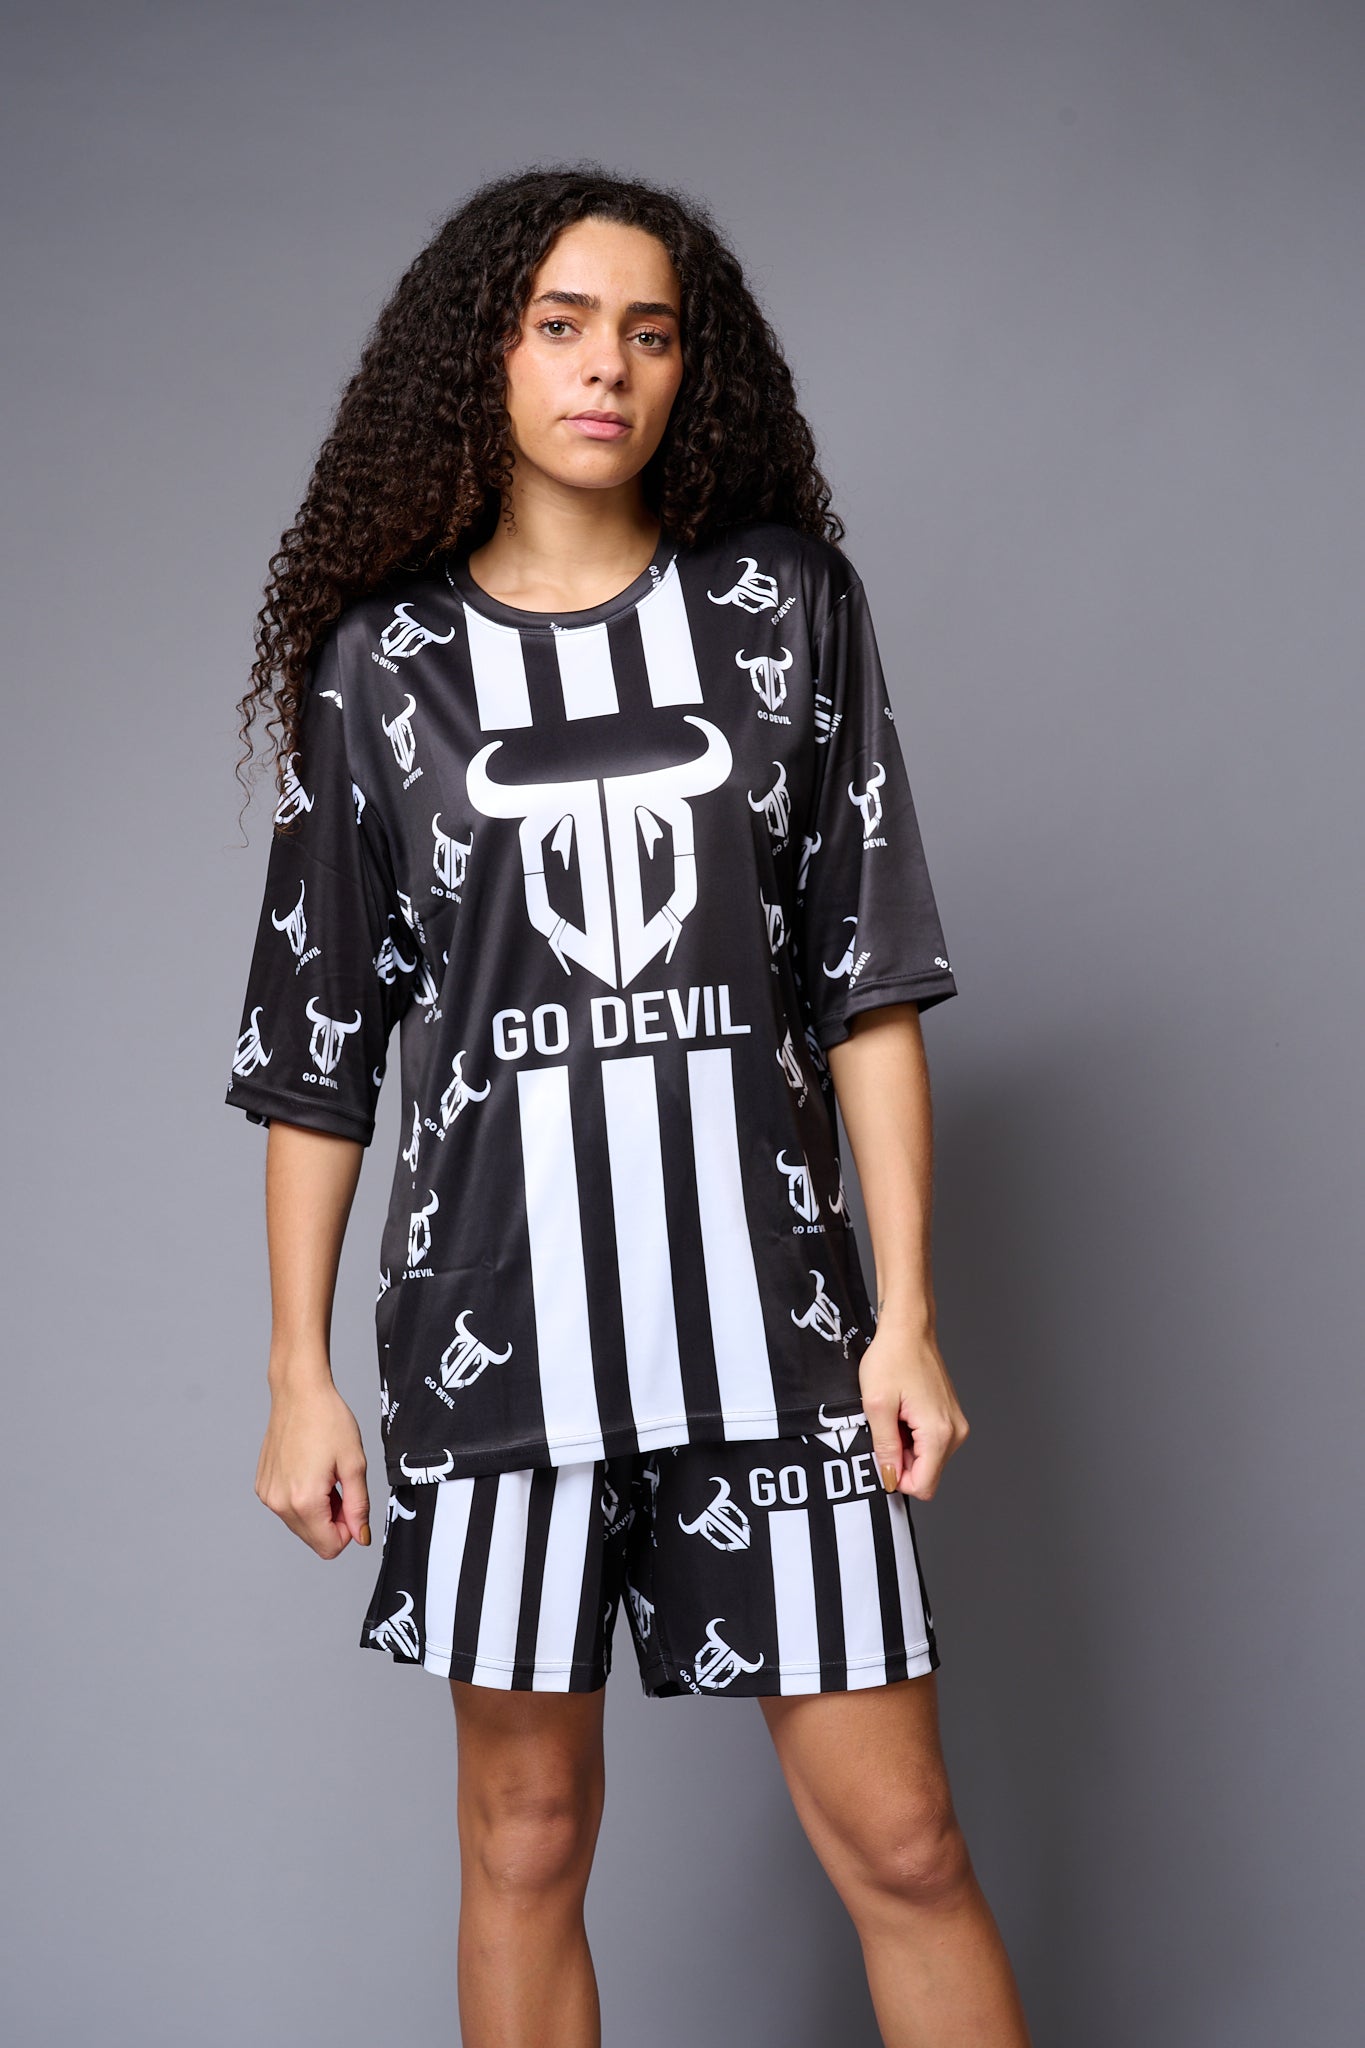 Go Devil (with Logo) Printed Black Co-ord Set for Women - Go Devil